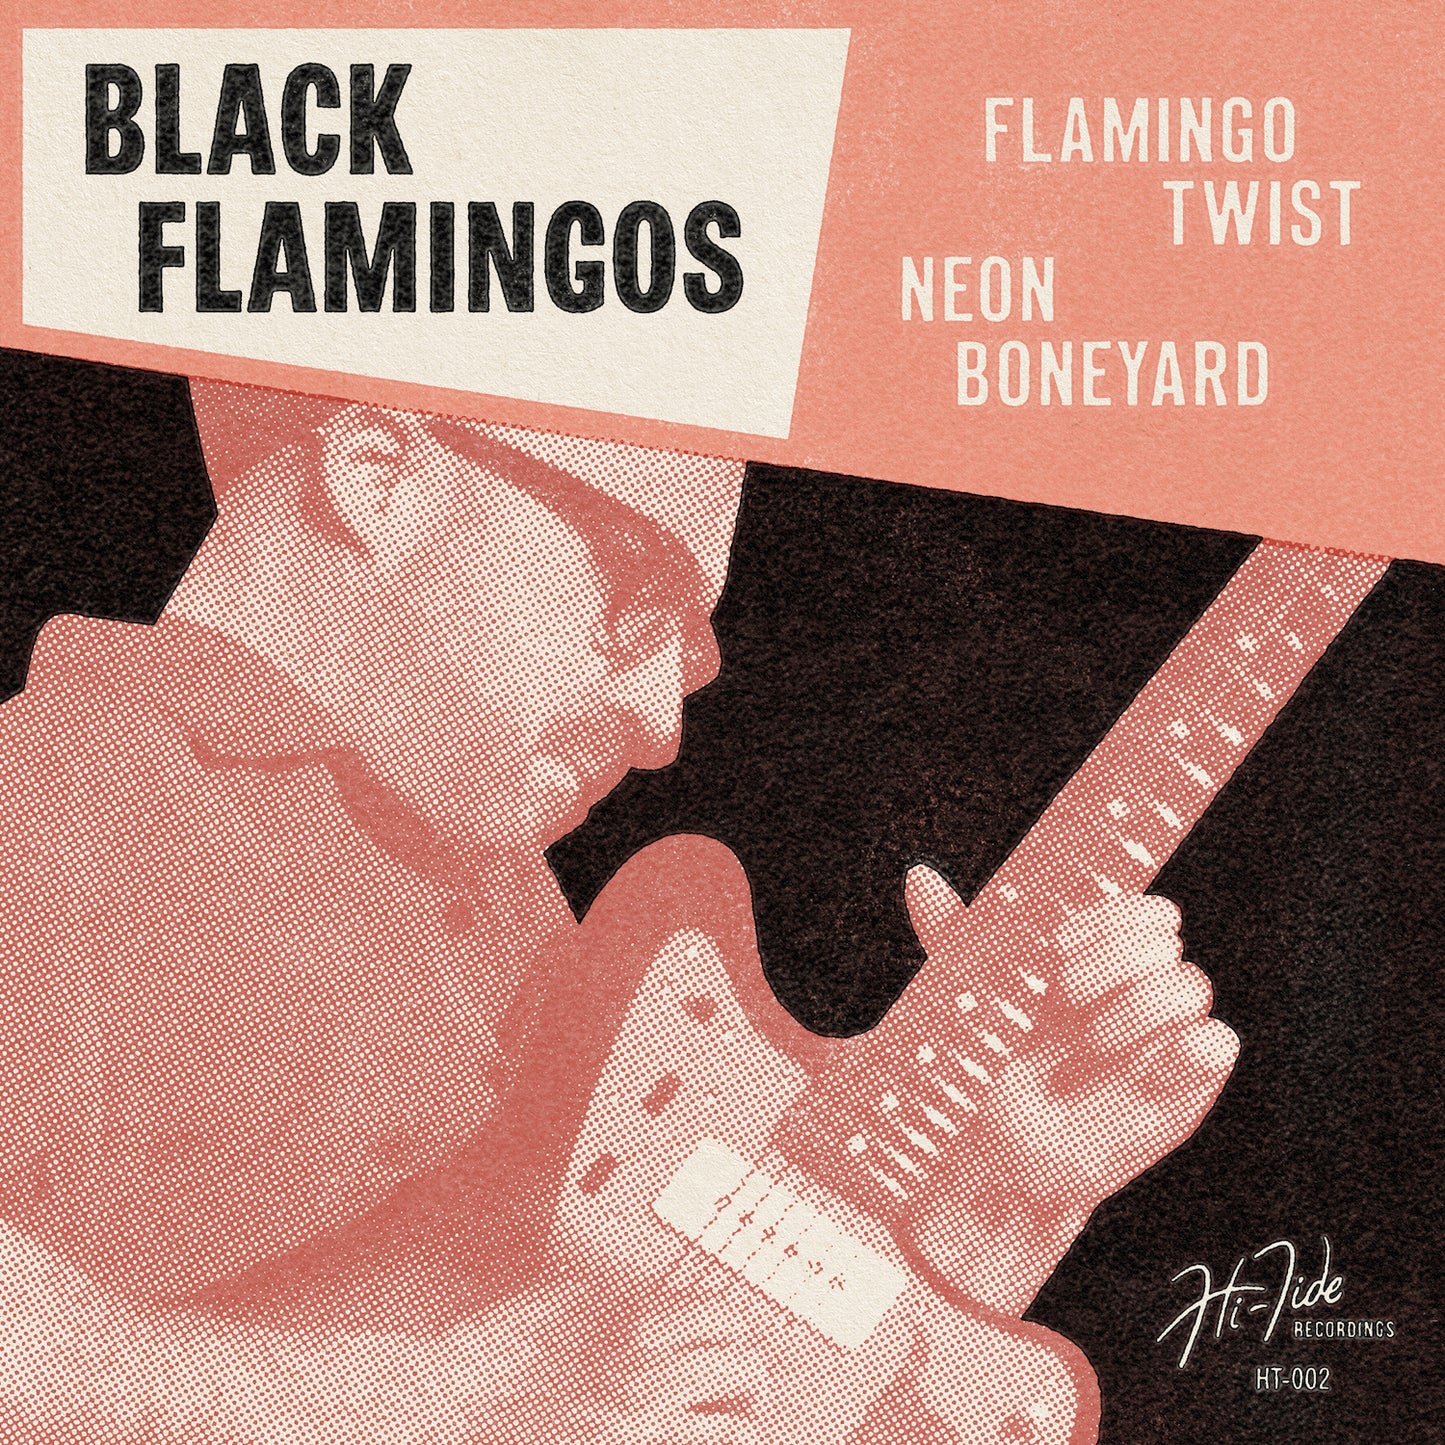 Black Flamingos "Flamingo Twist / Neon Boneyard” Single